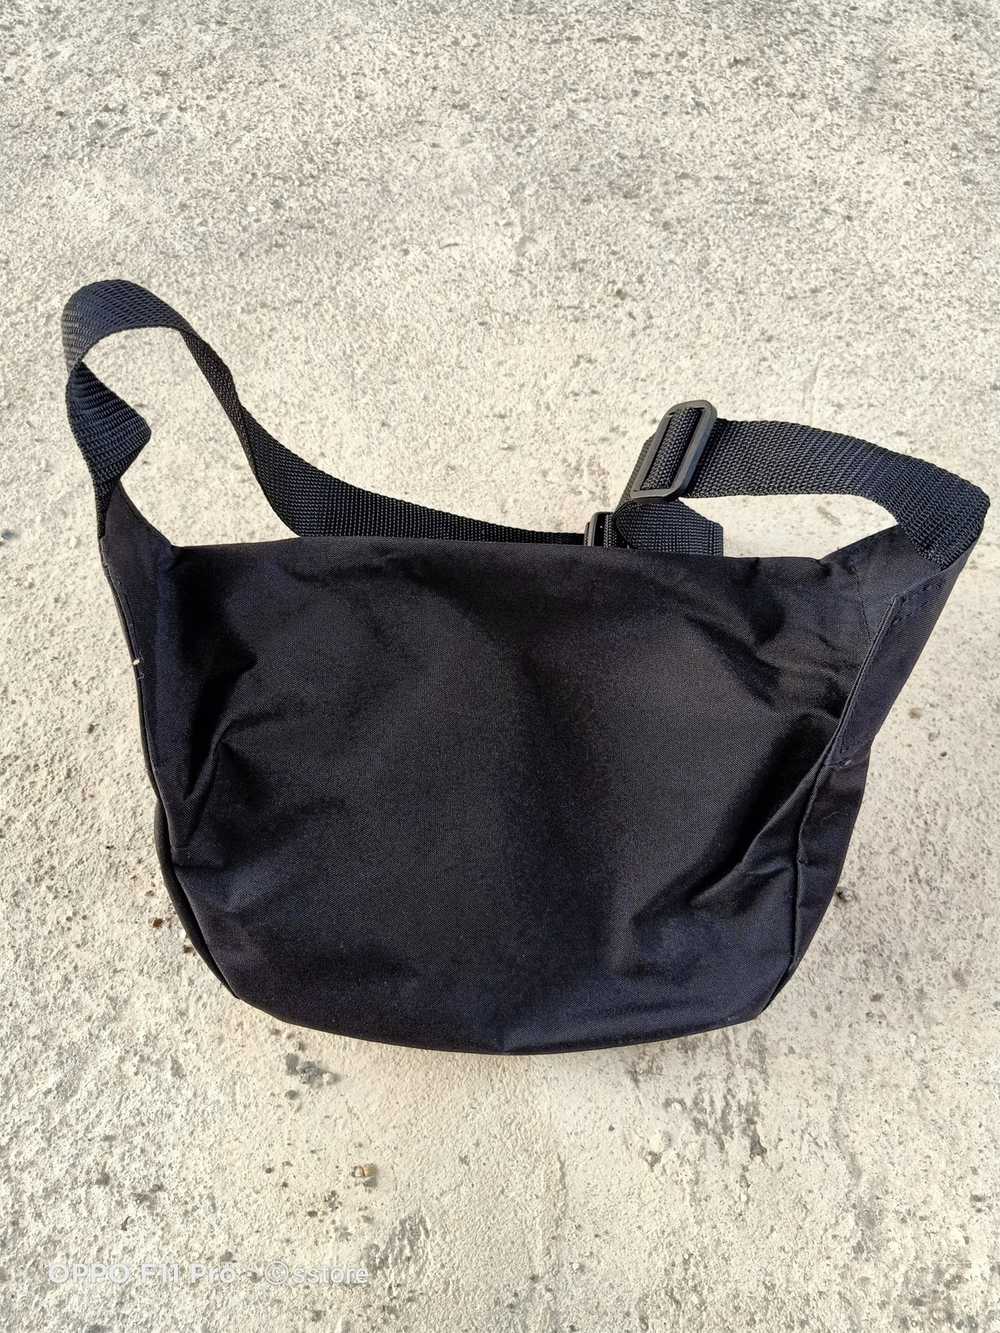 Japanese Brand Cune Waist Bag - image 11